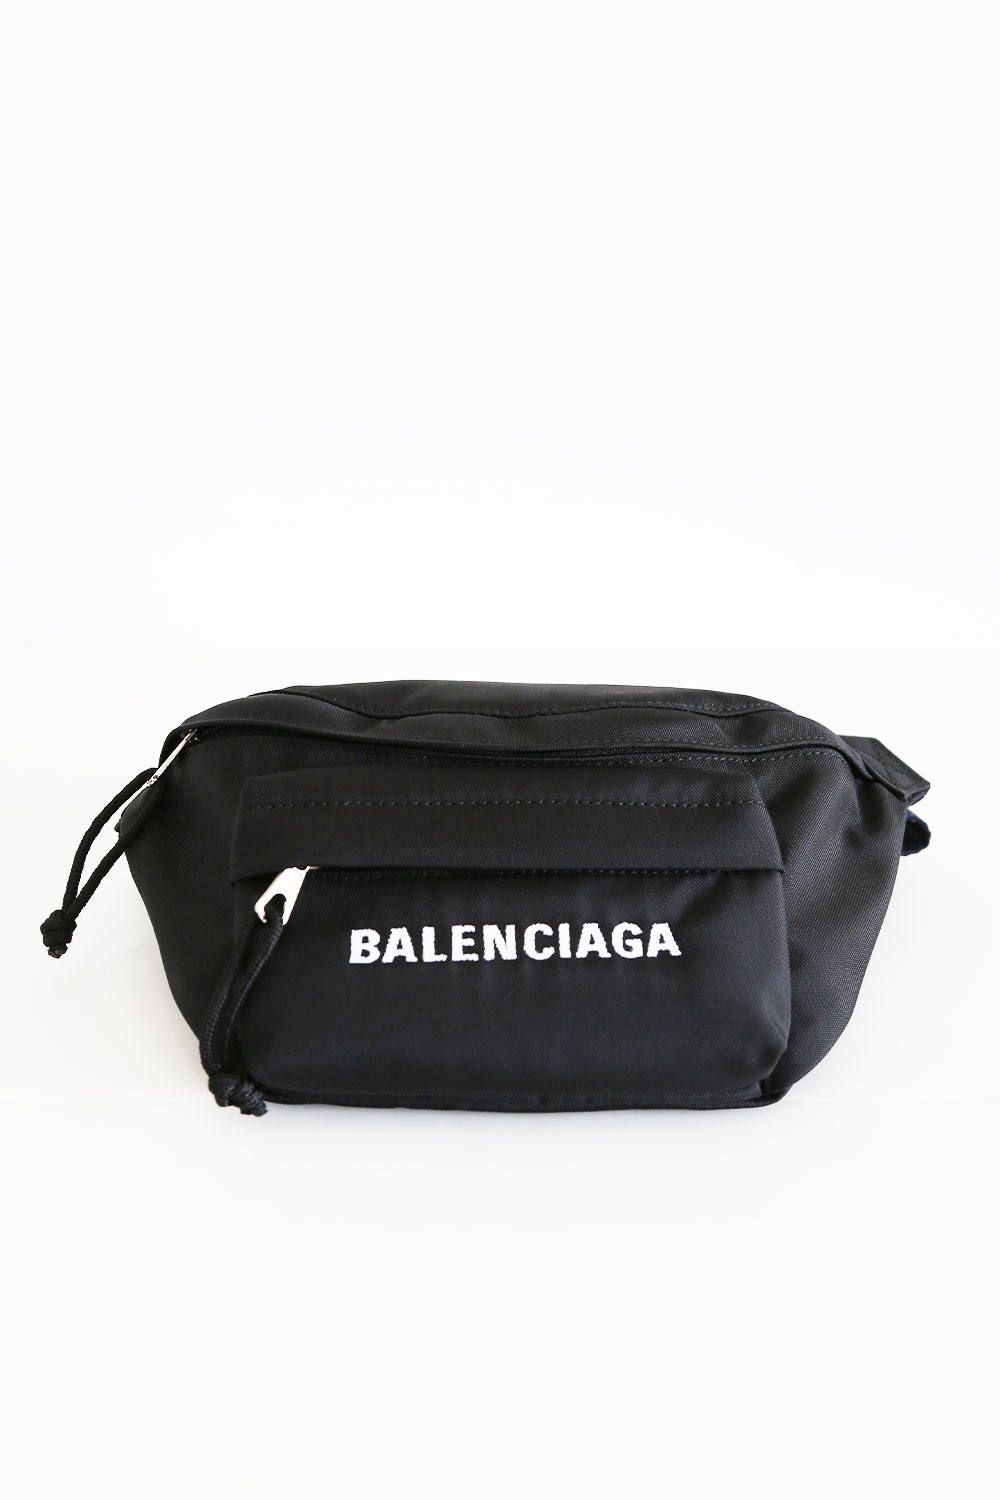 BALENCIAGA - WHEEL BELTPACK S / ブラック | Tempt